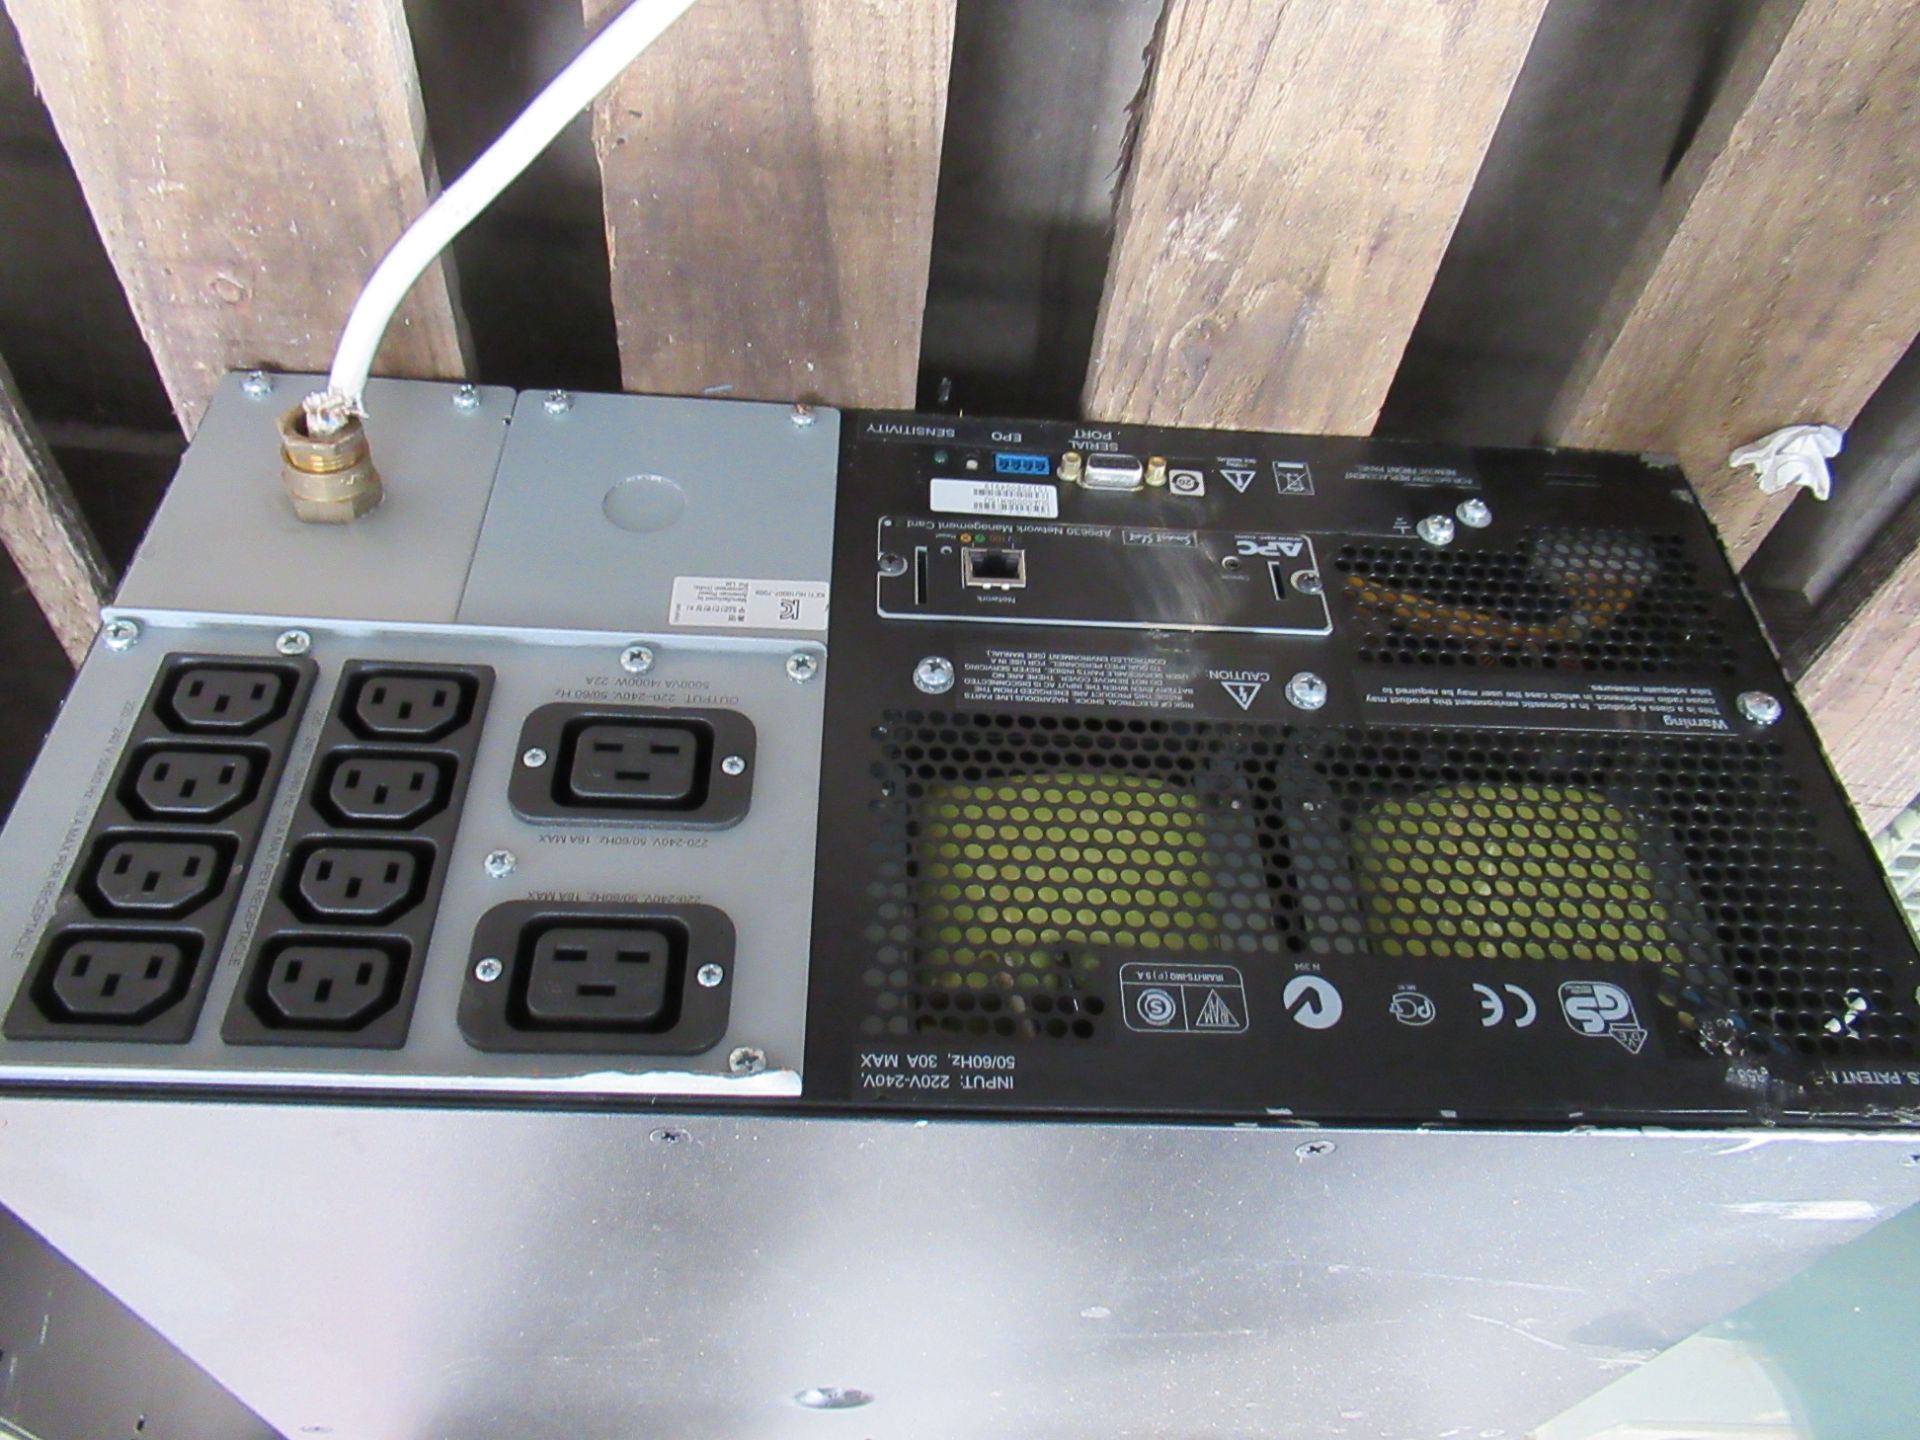 APC Smart UPS Unit Model 5000 - Image 2 of 4